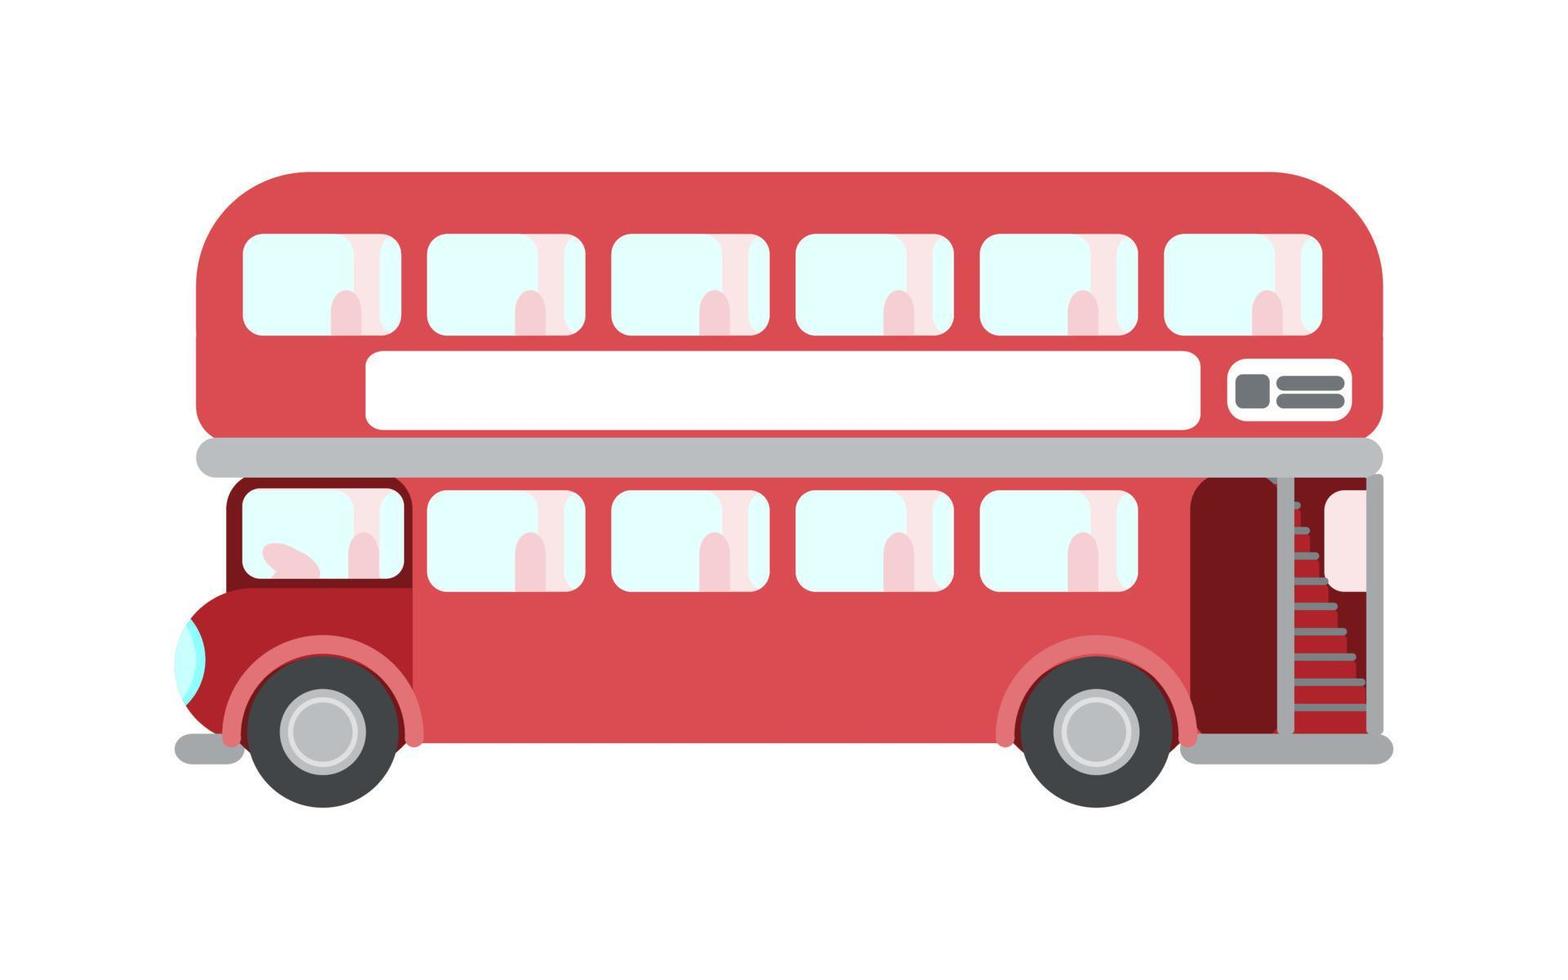 londres double decker bus red historic. estilo plano vetor